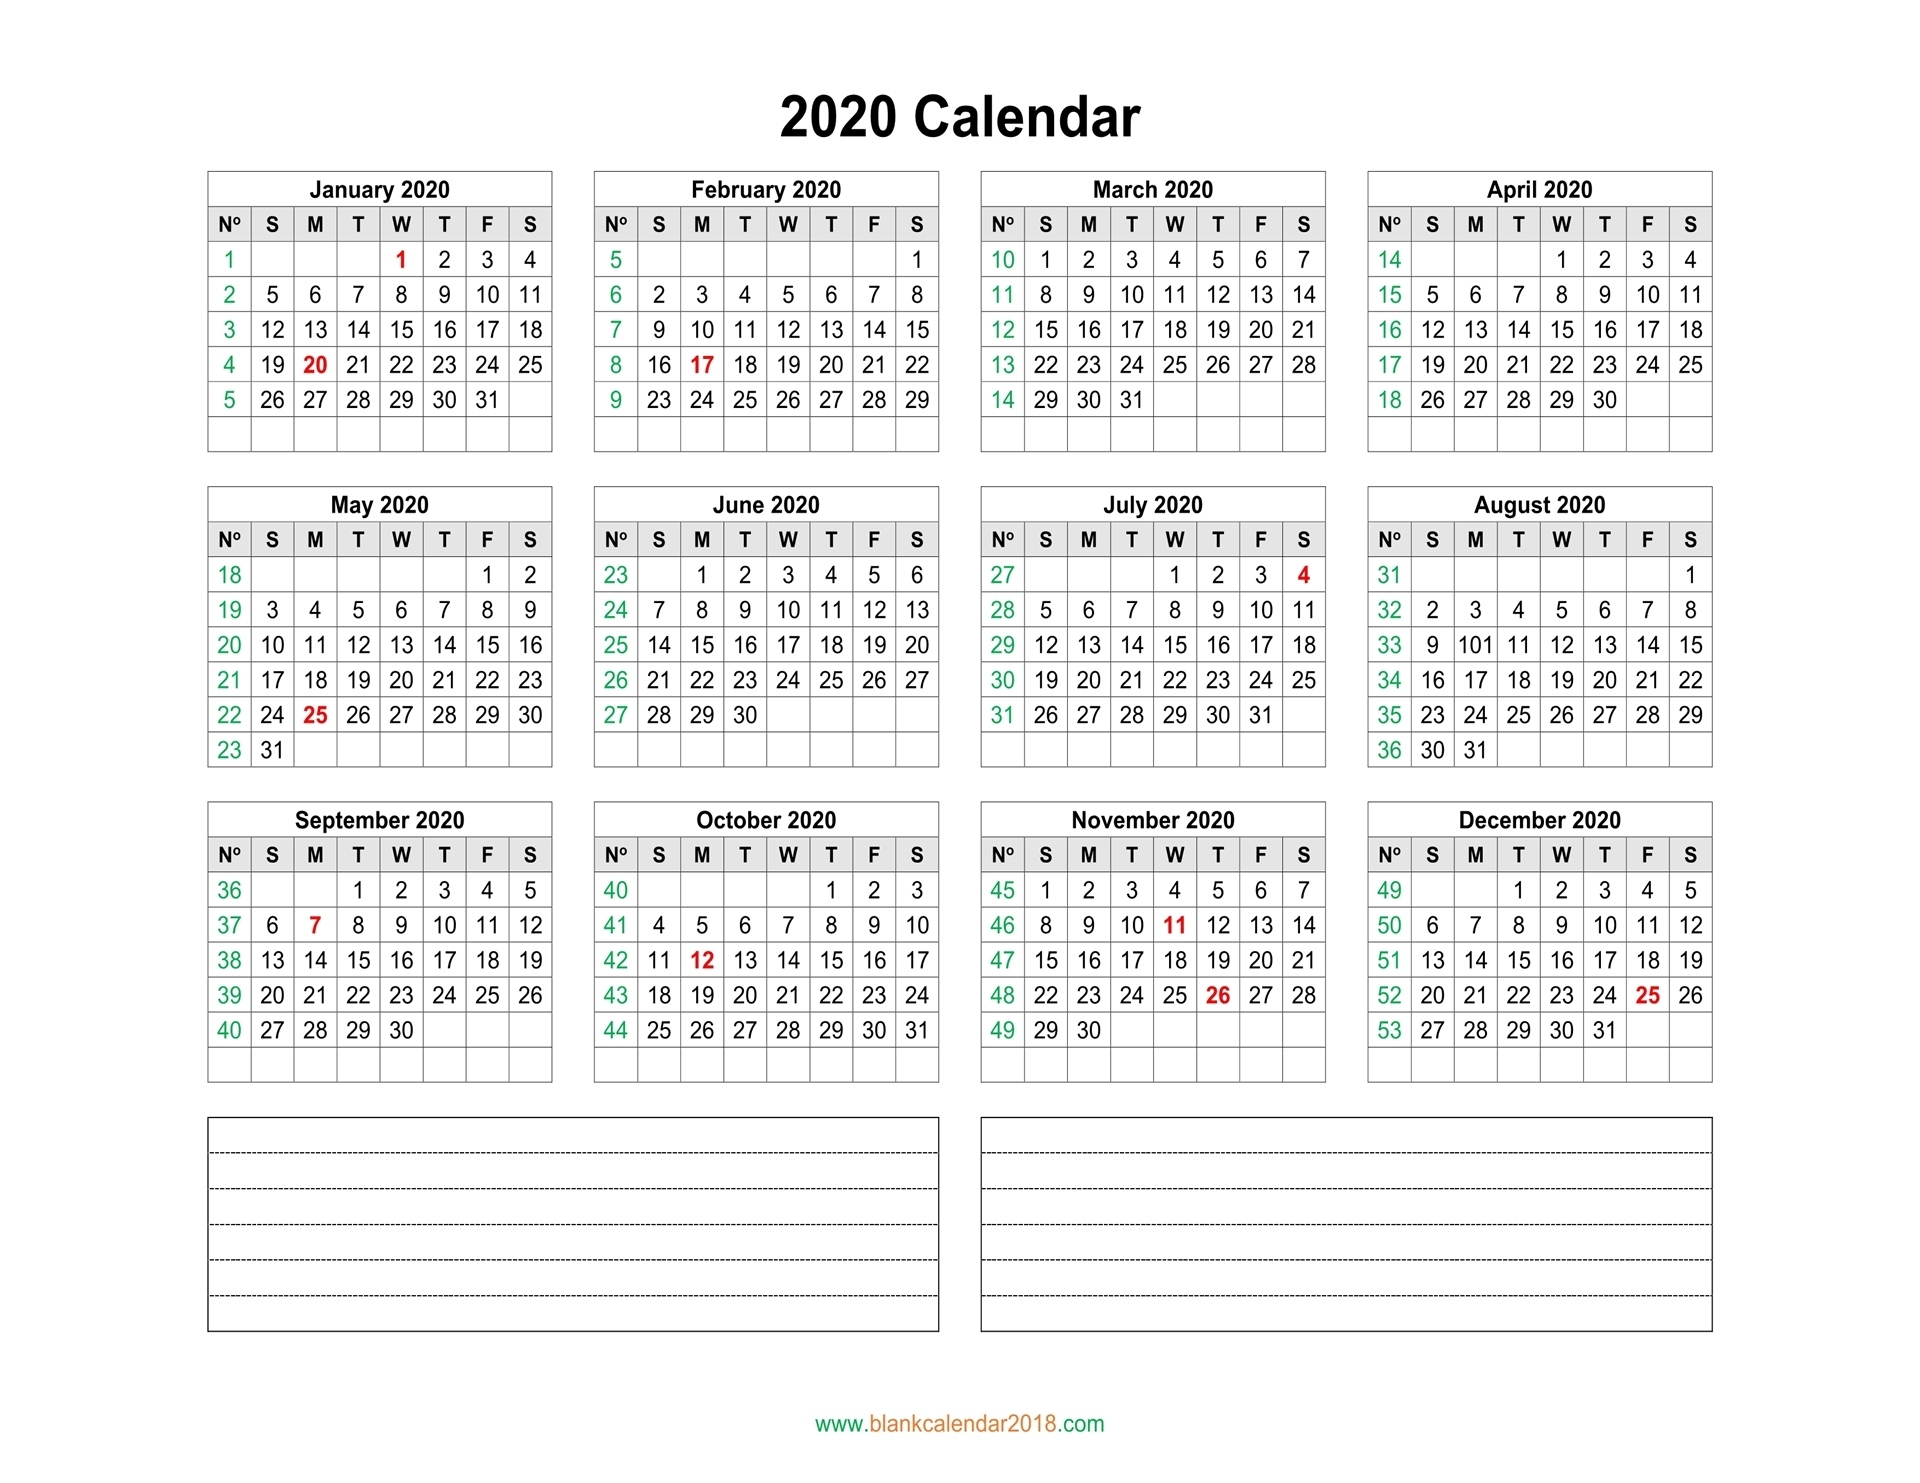 Blank Calendar 2020 2020 Yearly Calendar Printable